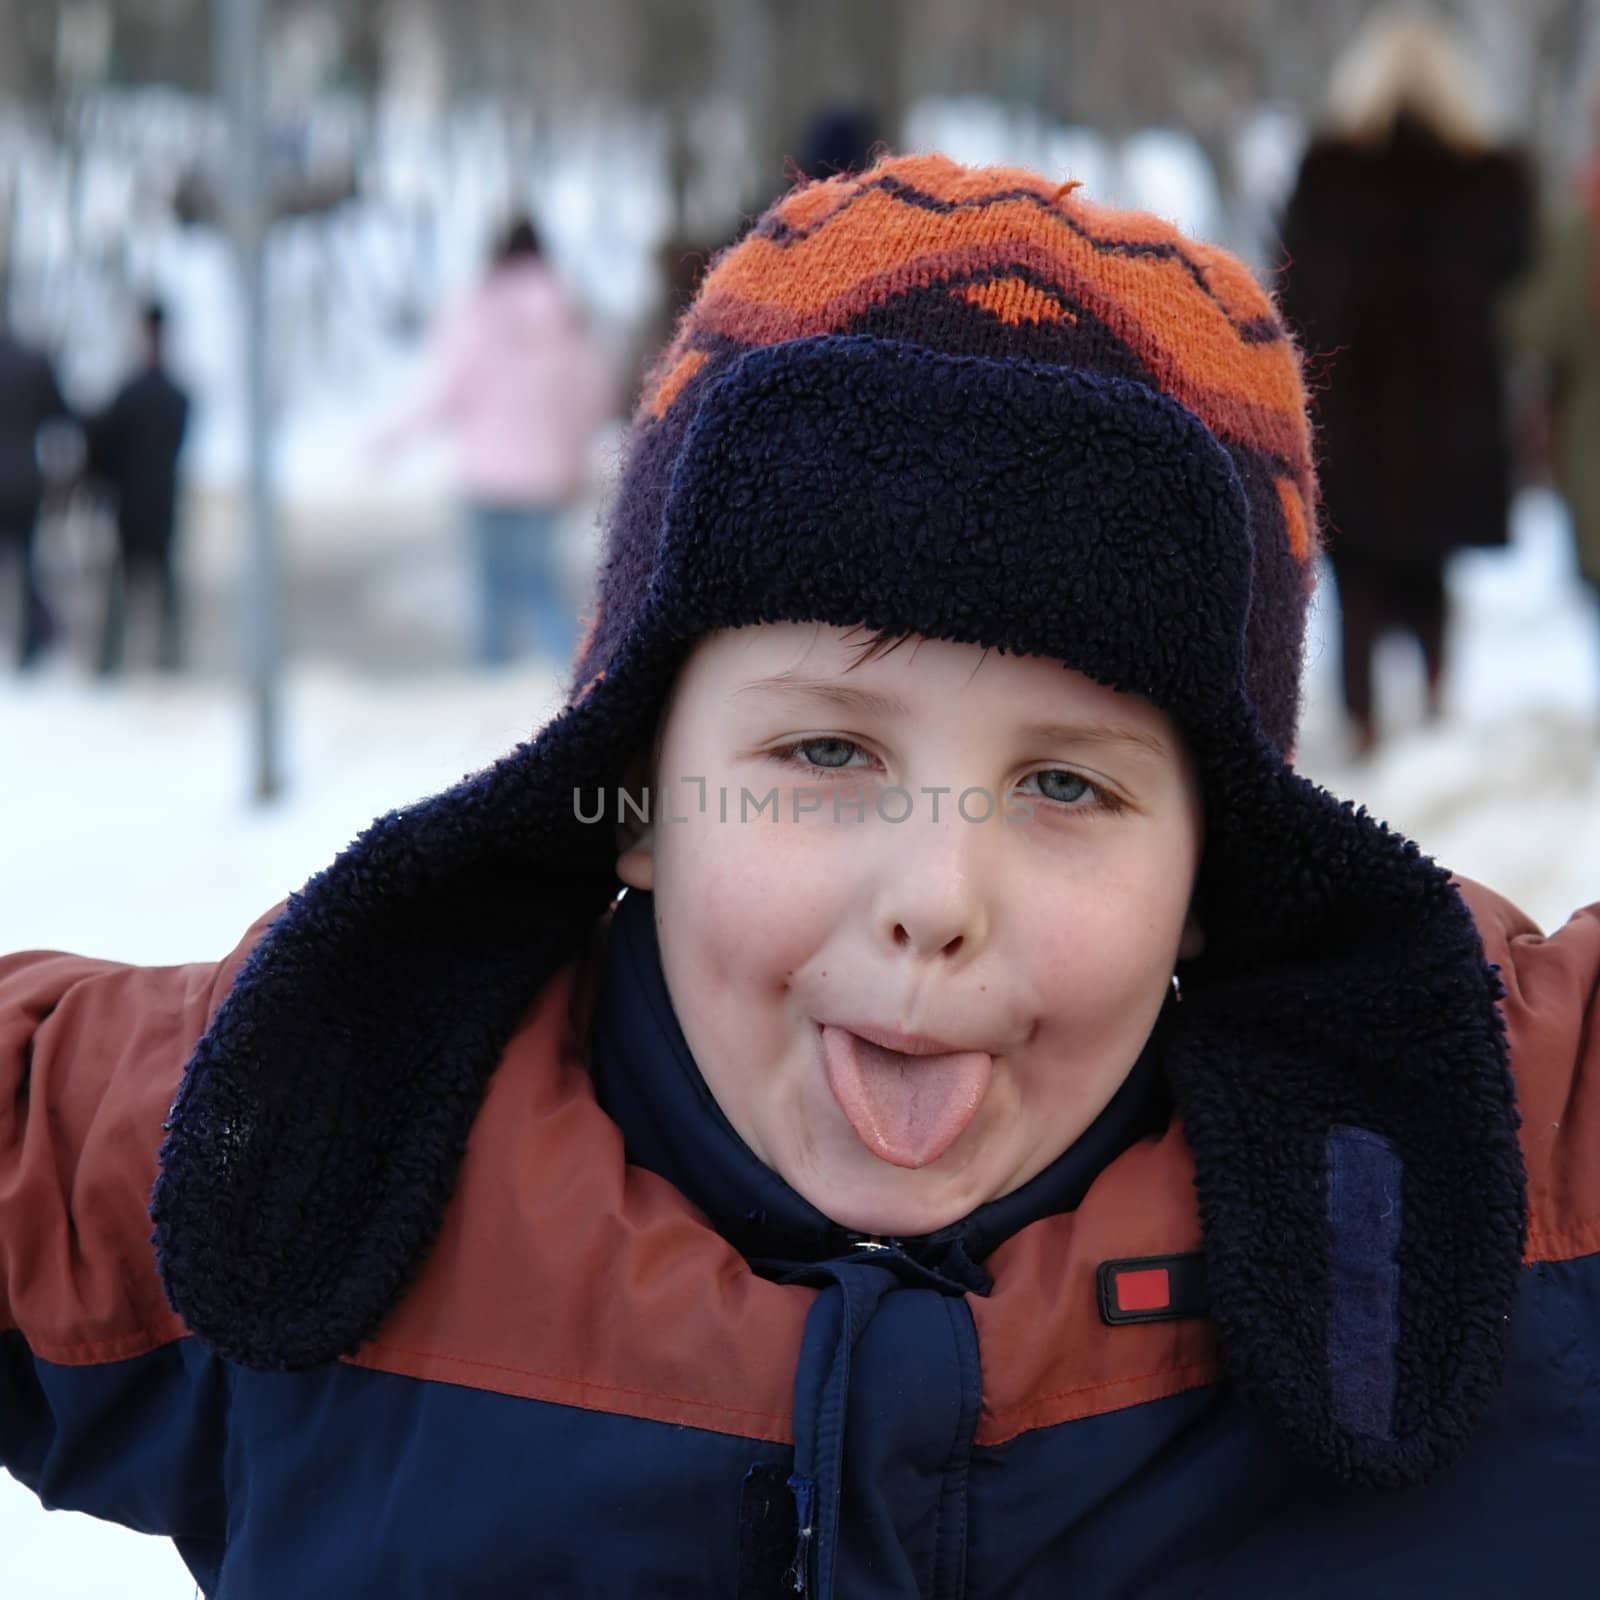 A little boy sticks one's tongue out